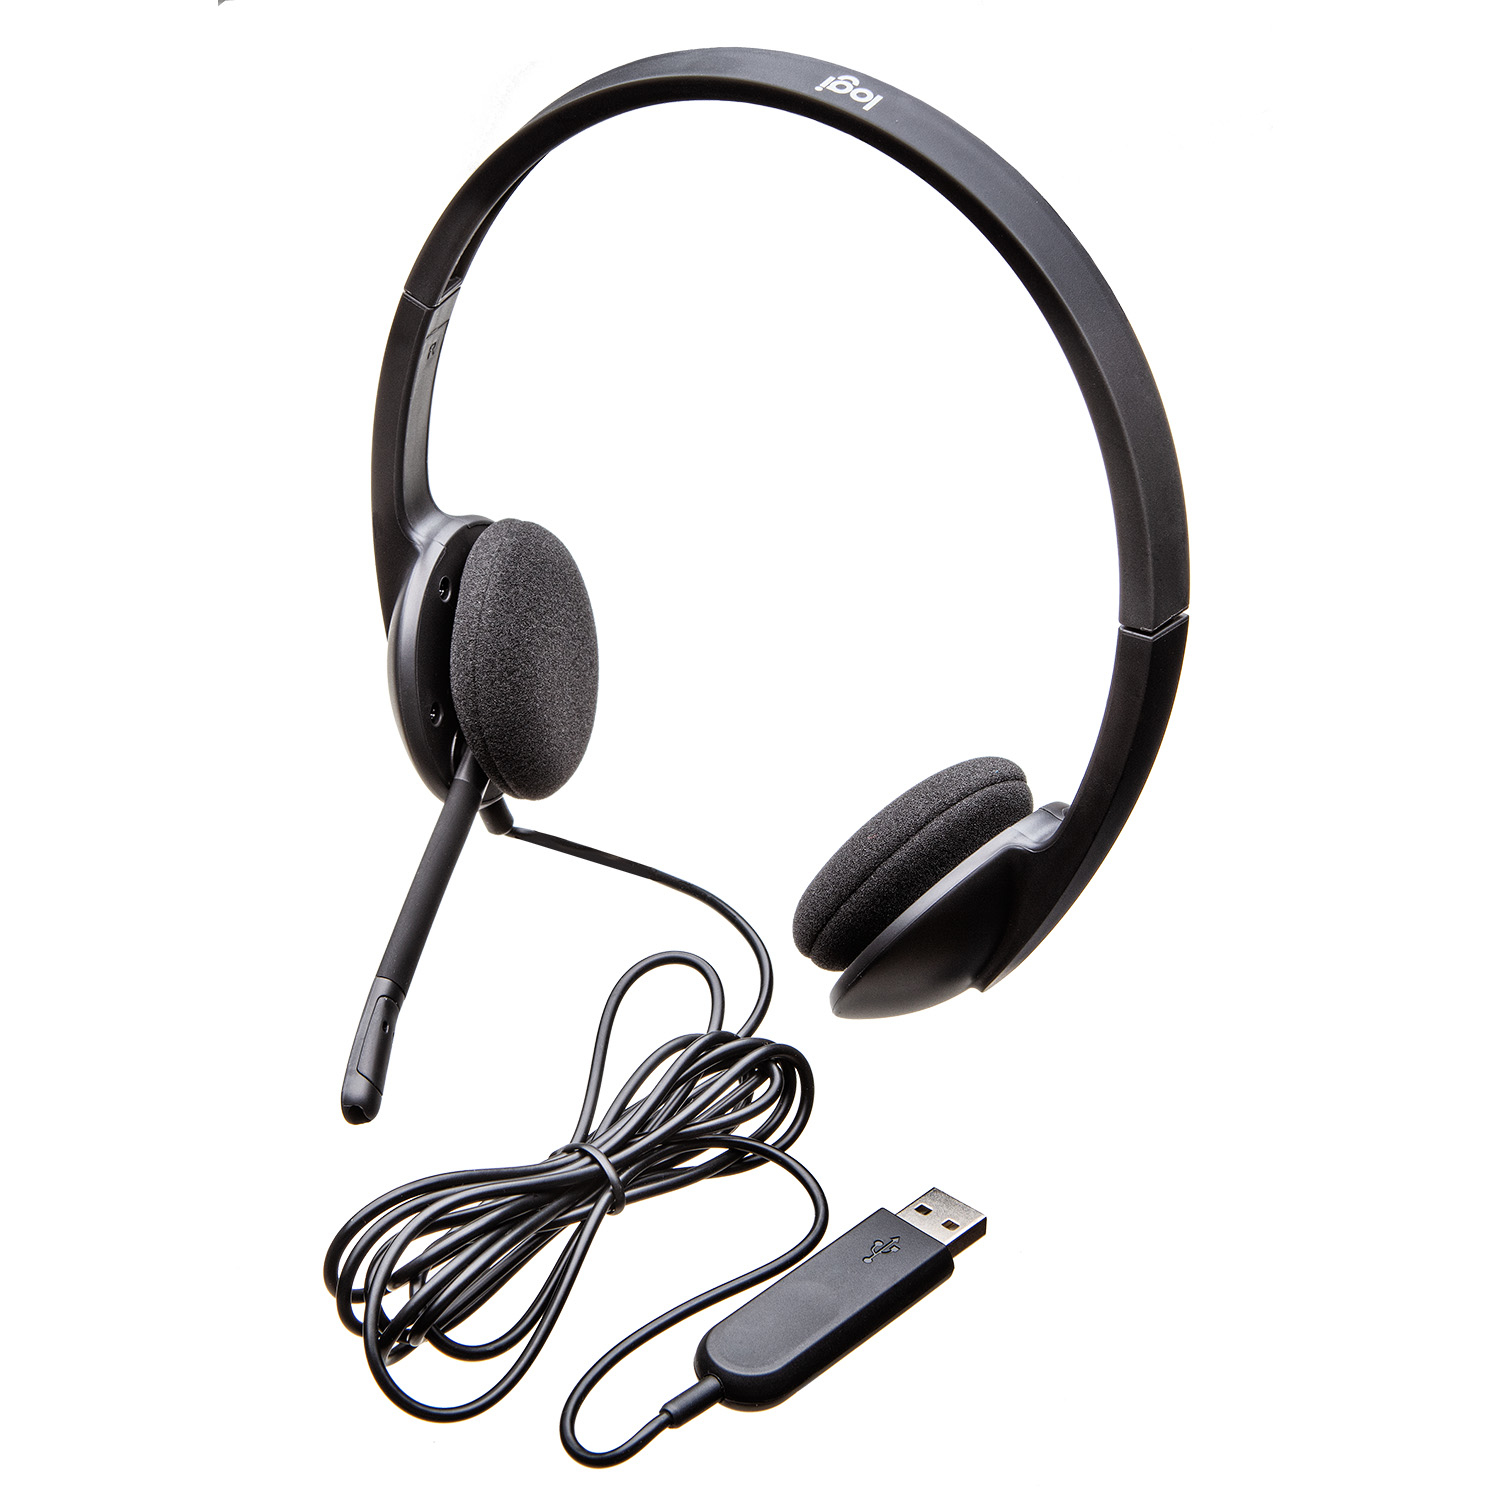 Logitech H340 Headset Head-band USB Type-A Black